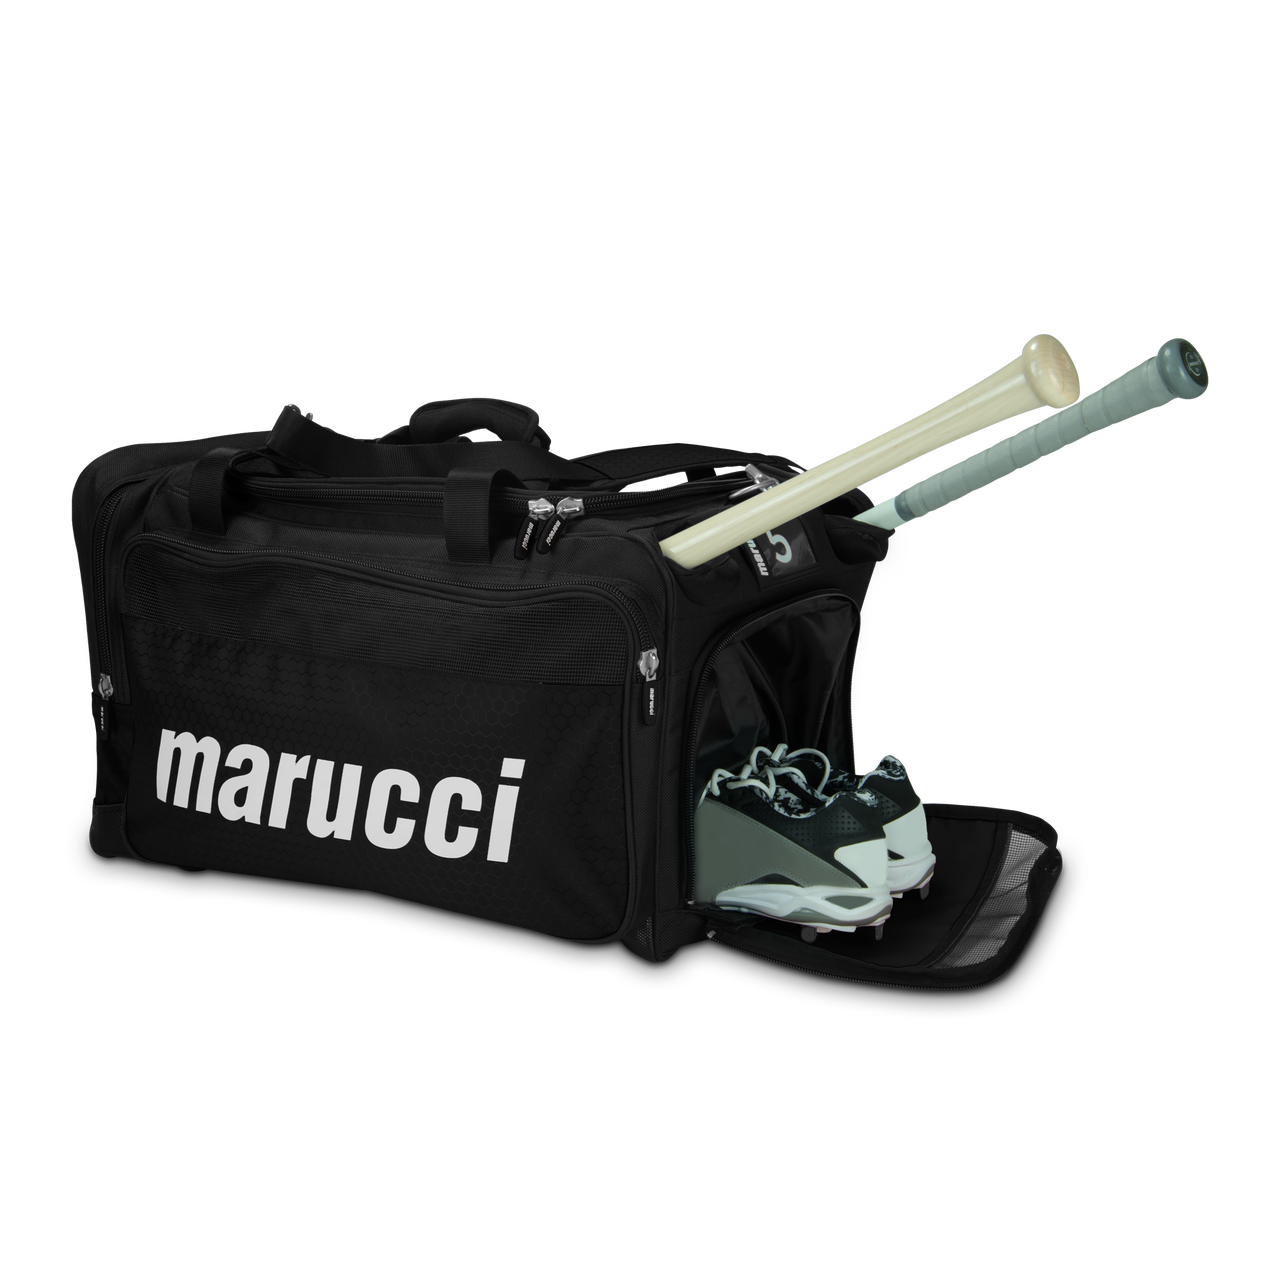 marucci bags